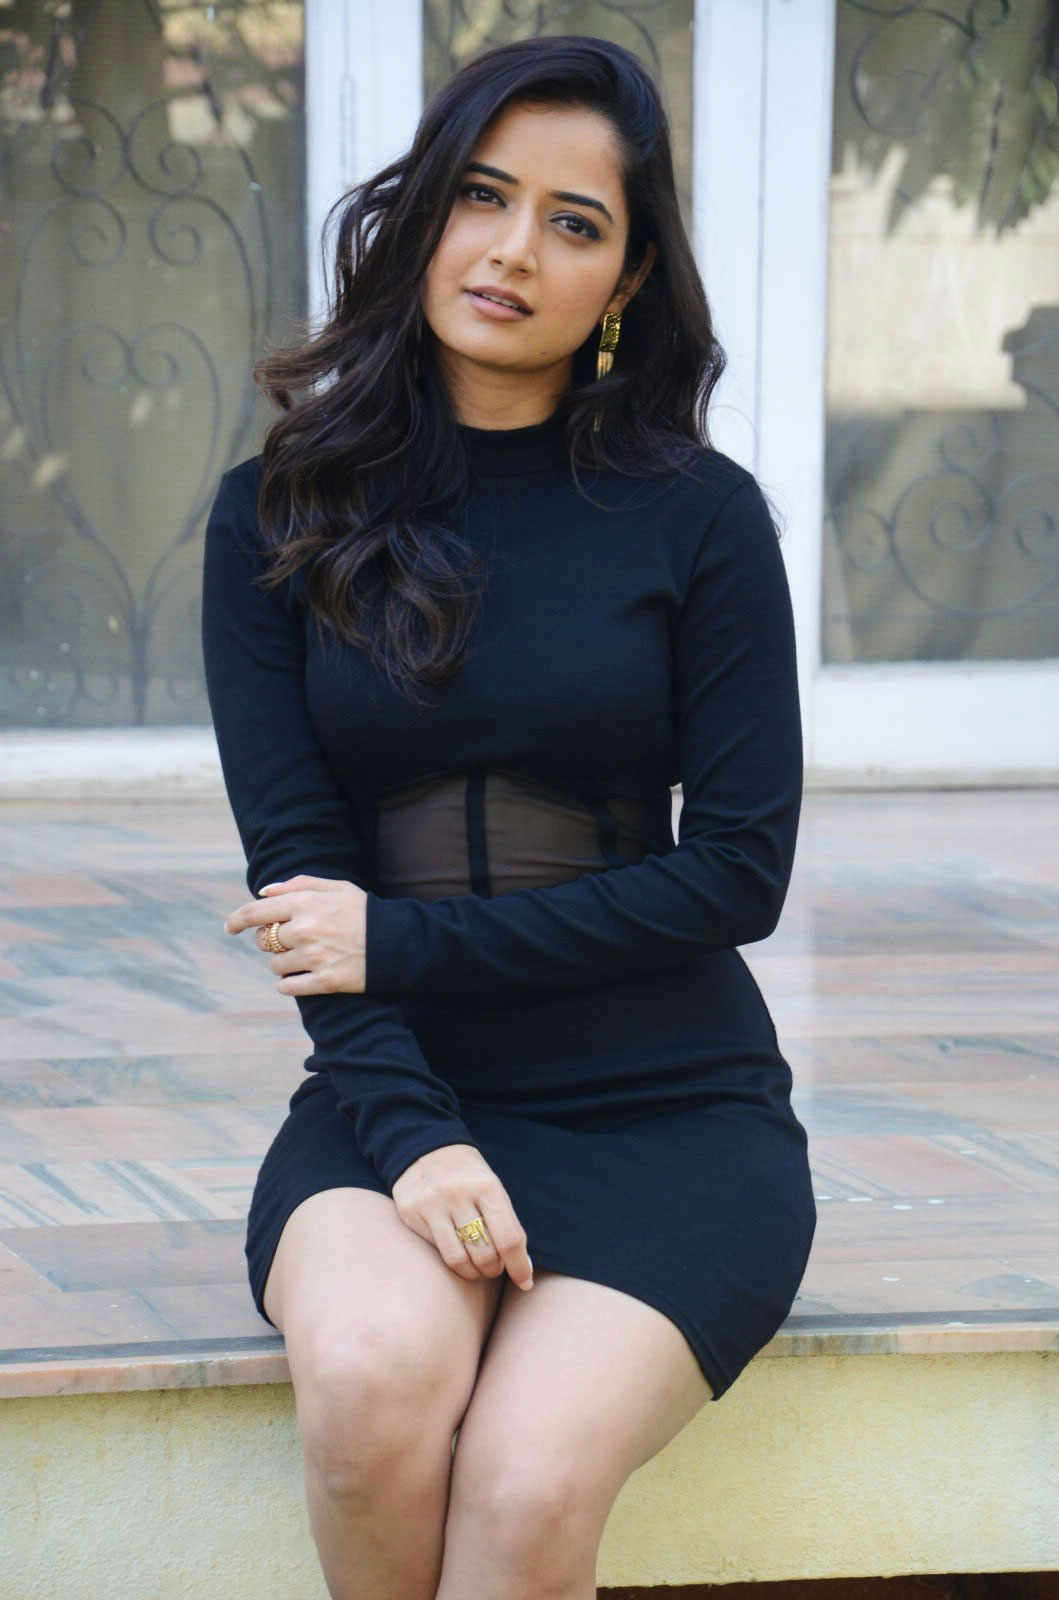 Ashika Ranganath hot stills at her Telugu debut movie Amigos promotion